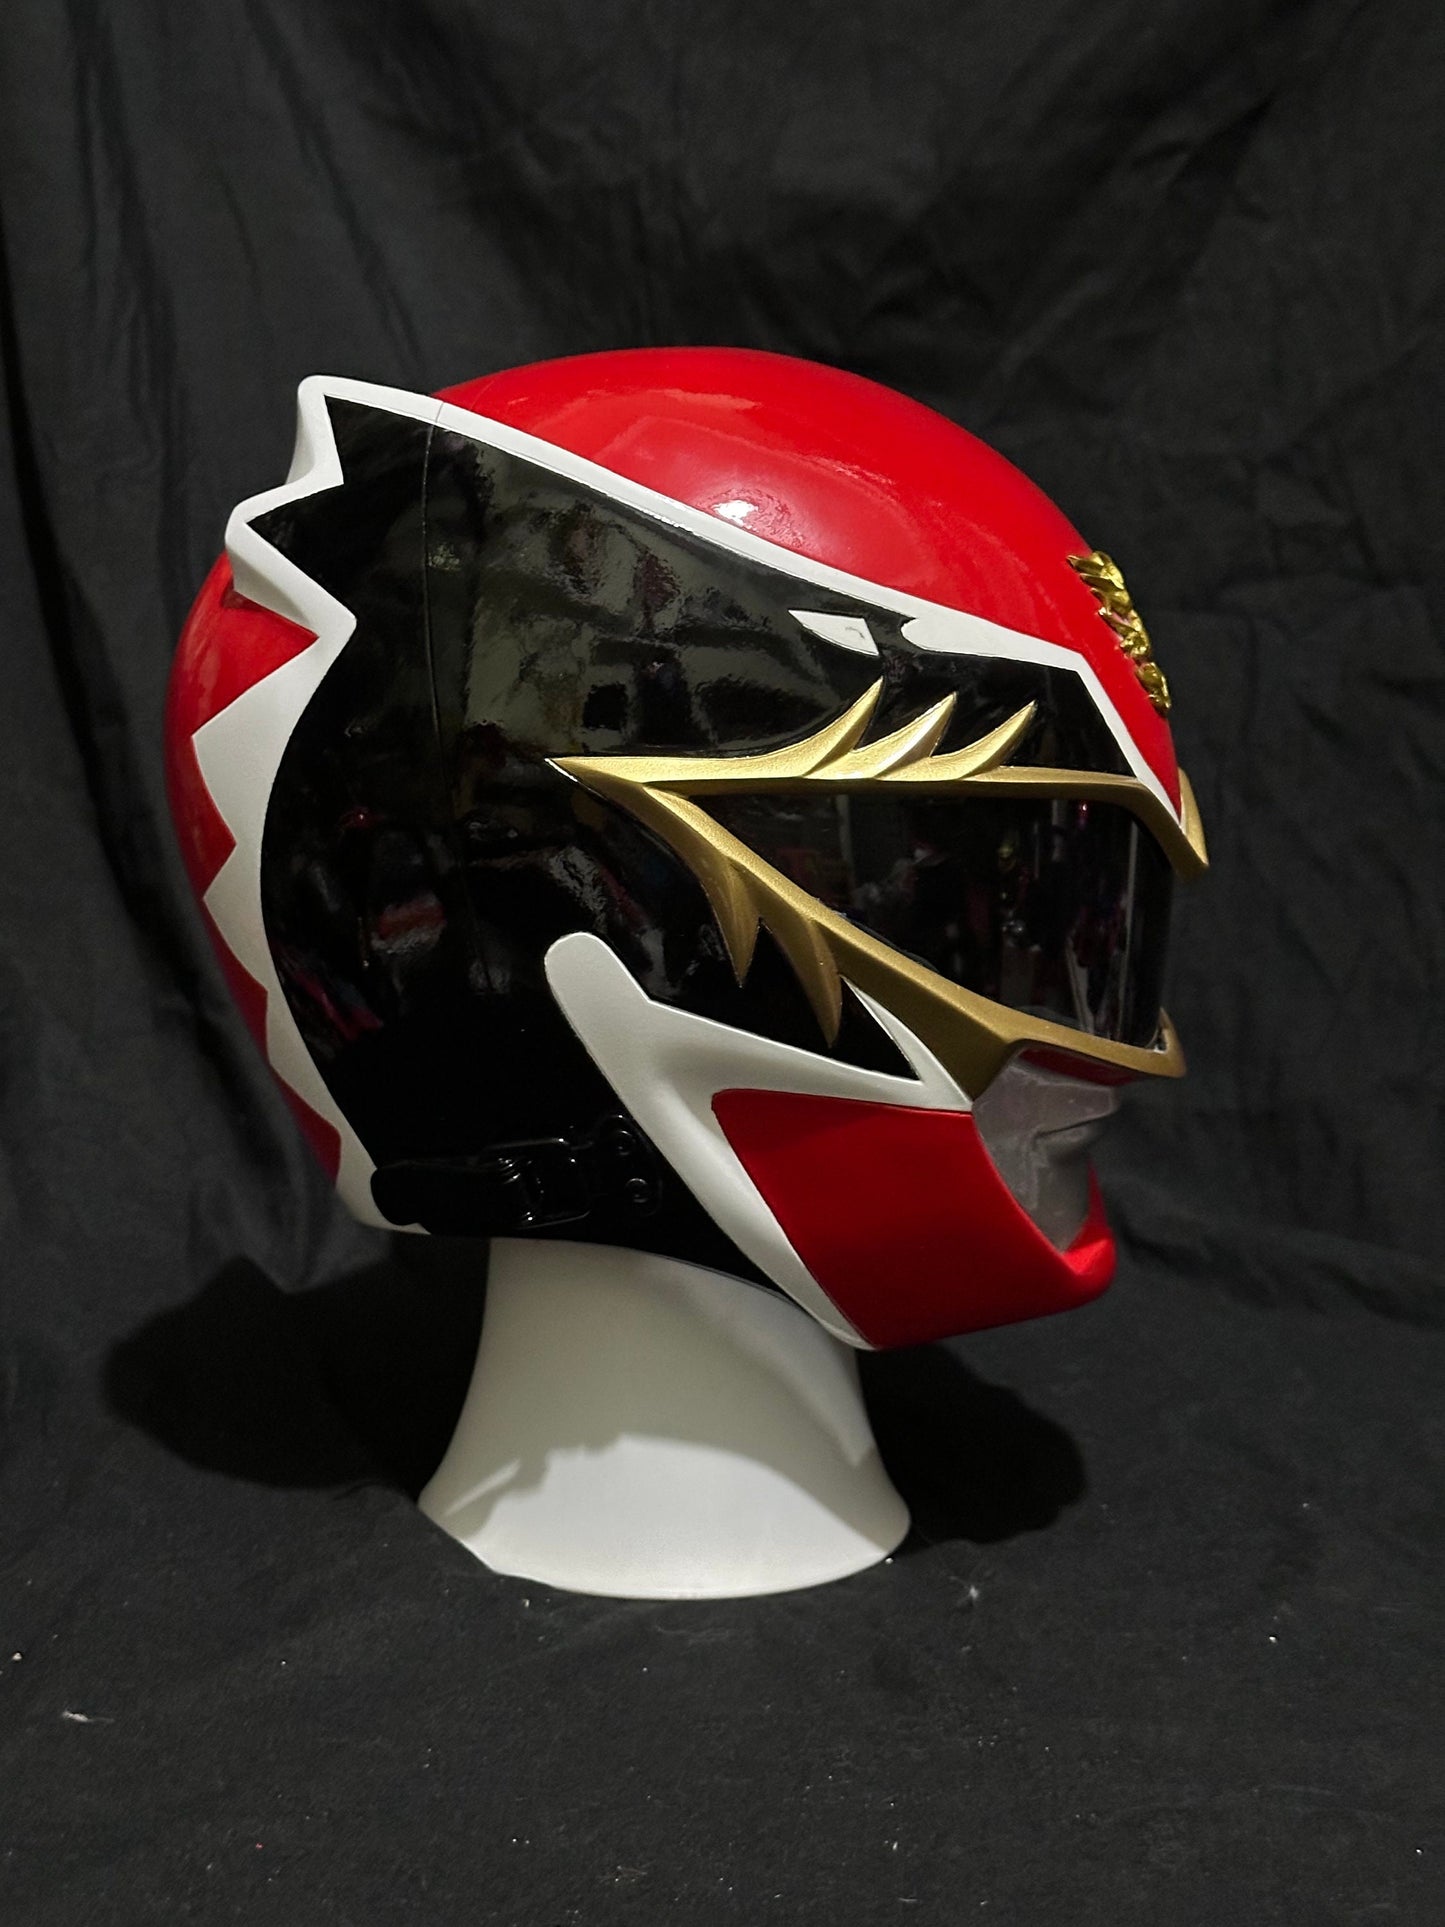 Power Rangers red Megaforce helmet / red Tensou Sentai Goseiger helmet